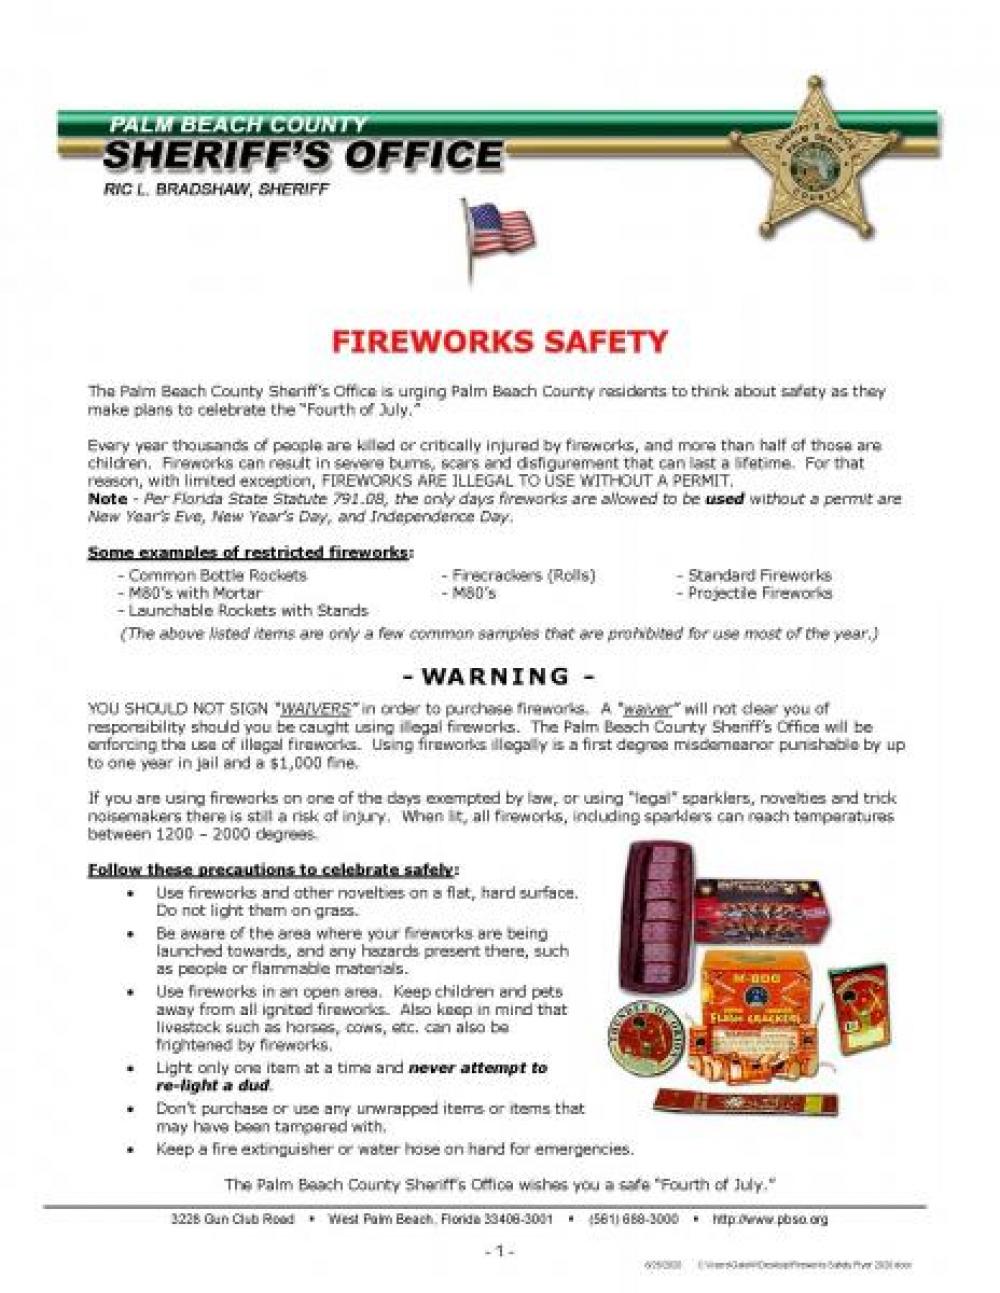 Image - News Bulletin from PBSO regarding Fireworks Safety